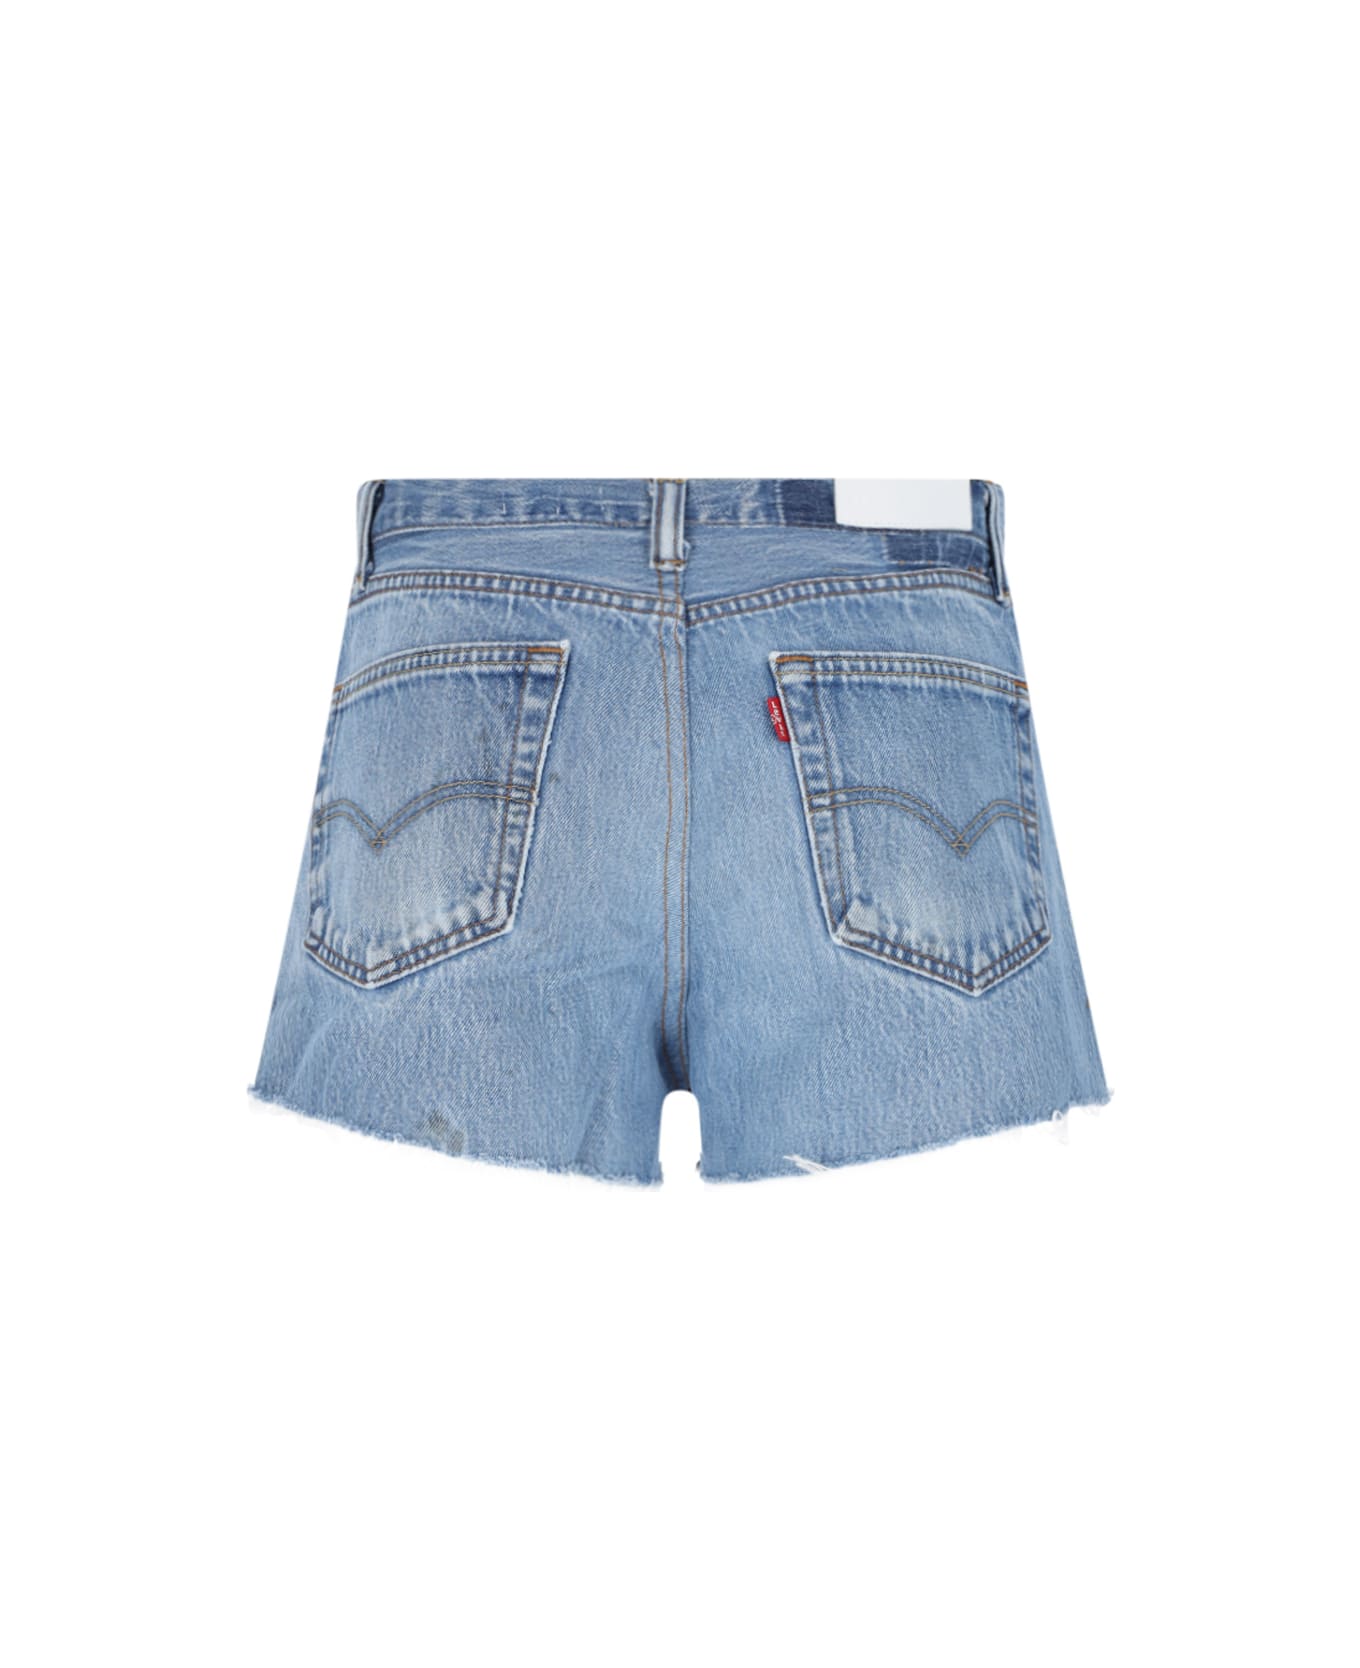 RE/DONE X Levi's Denim Shorts - Blue